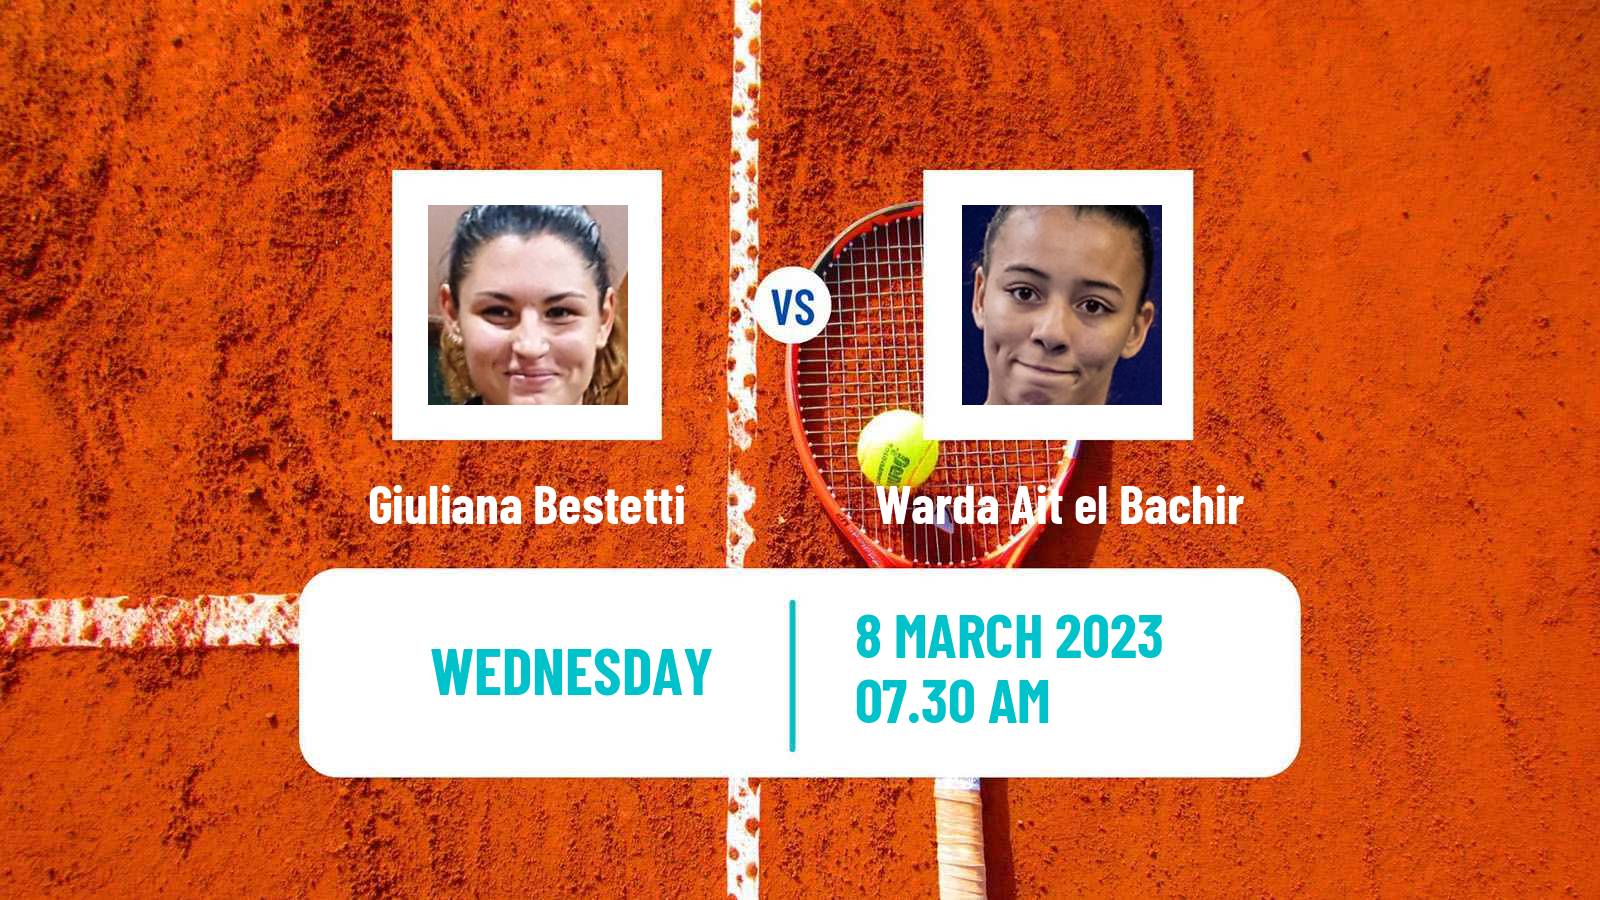 Tennis ITF Tournaments Giuliana Bestetti - Warda Ait el Bachir